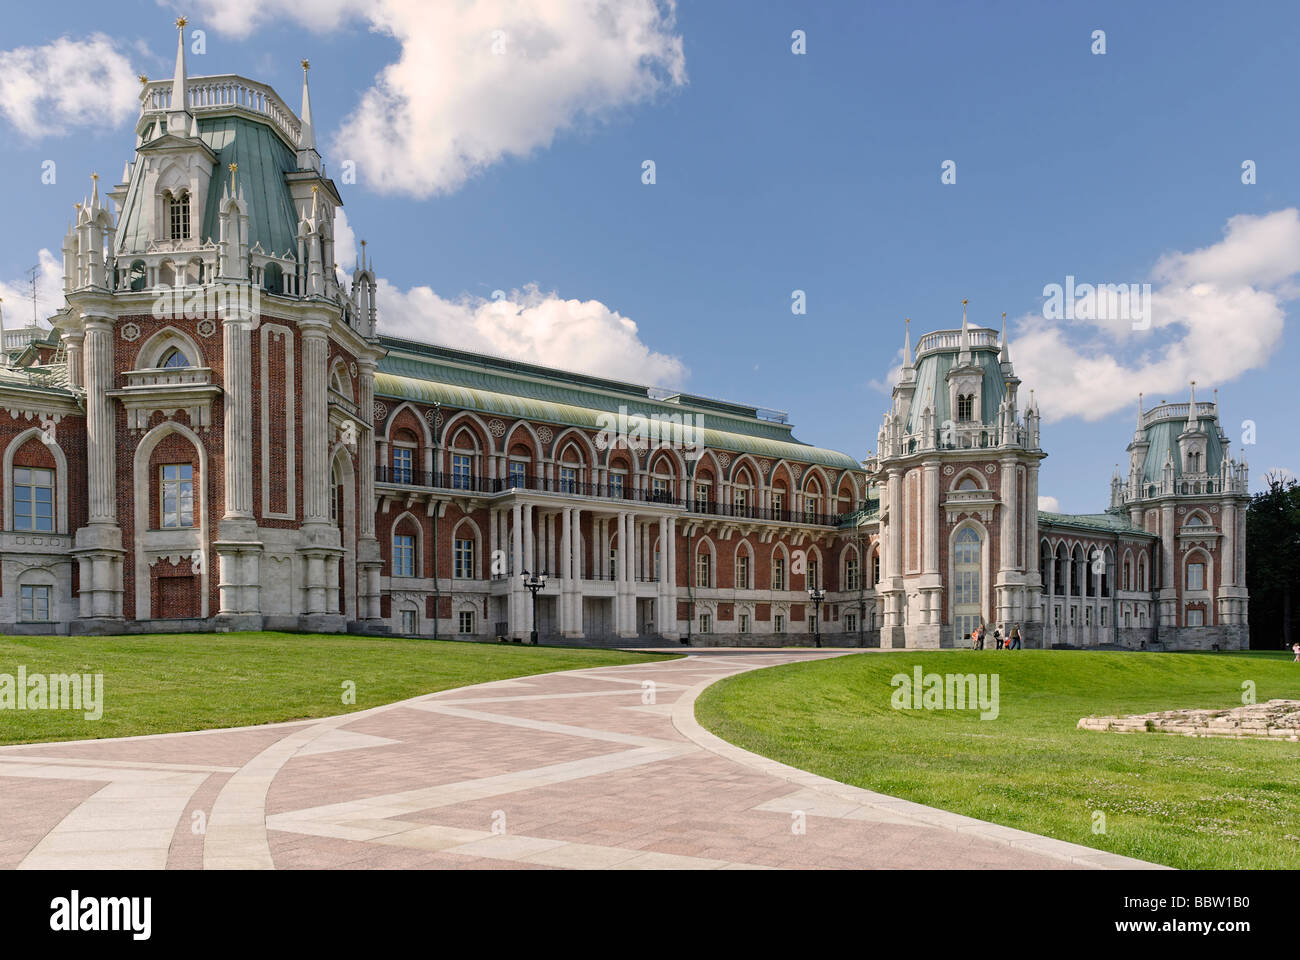 The Grand Palace (1786 -1796) in Tsaritsyno was built by Matvey Kazakov. Tsaritsyno estate, Moscow, Russia Stock Photo